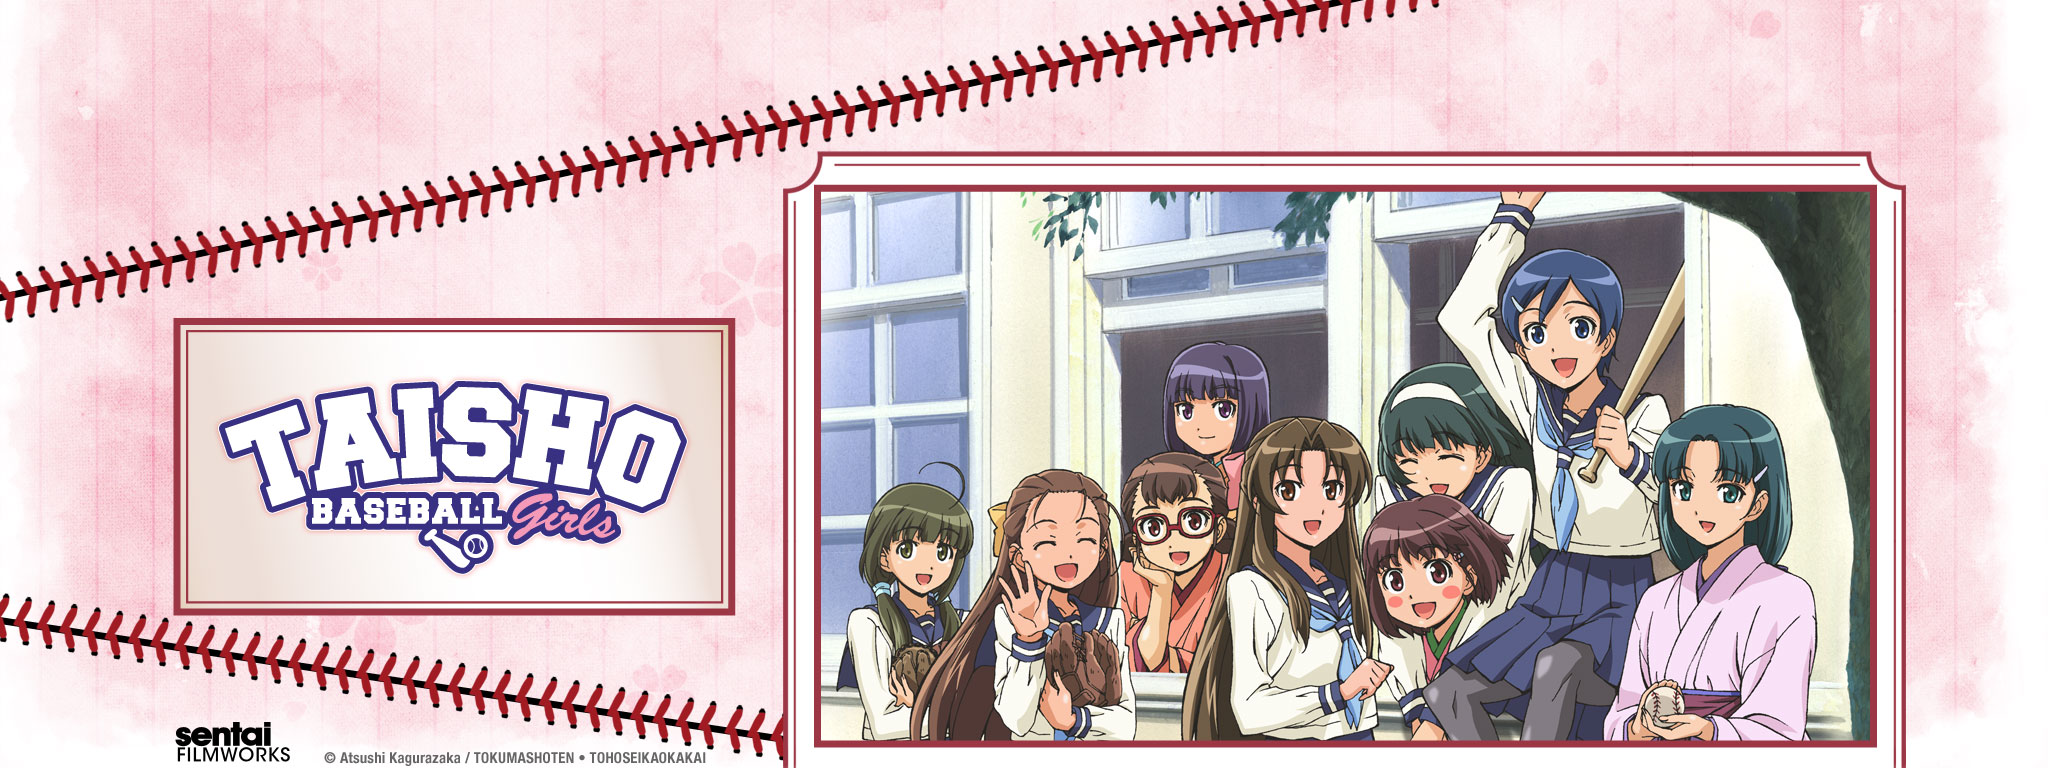 Title Art for Taisho Baseball Girls